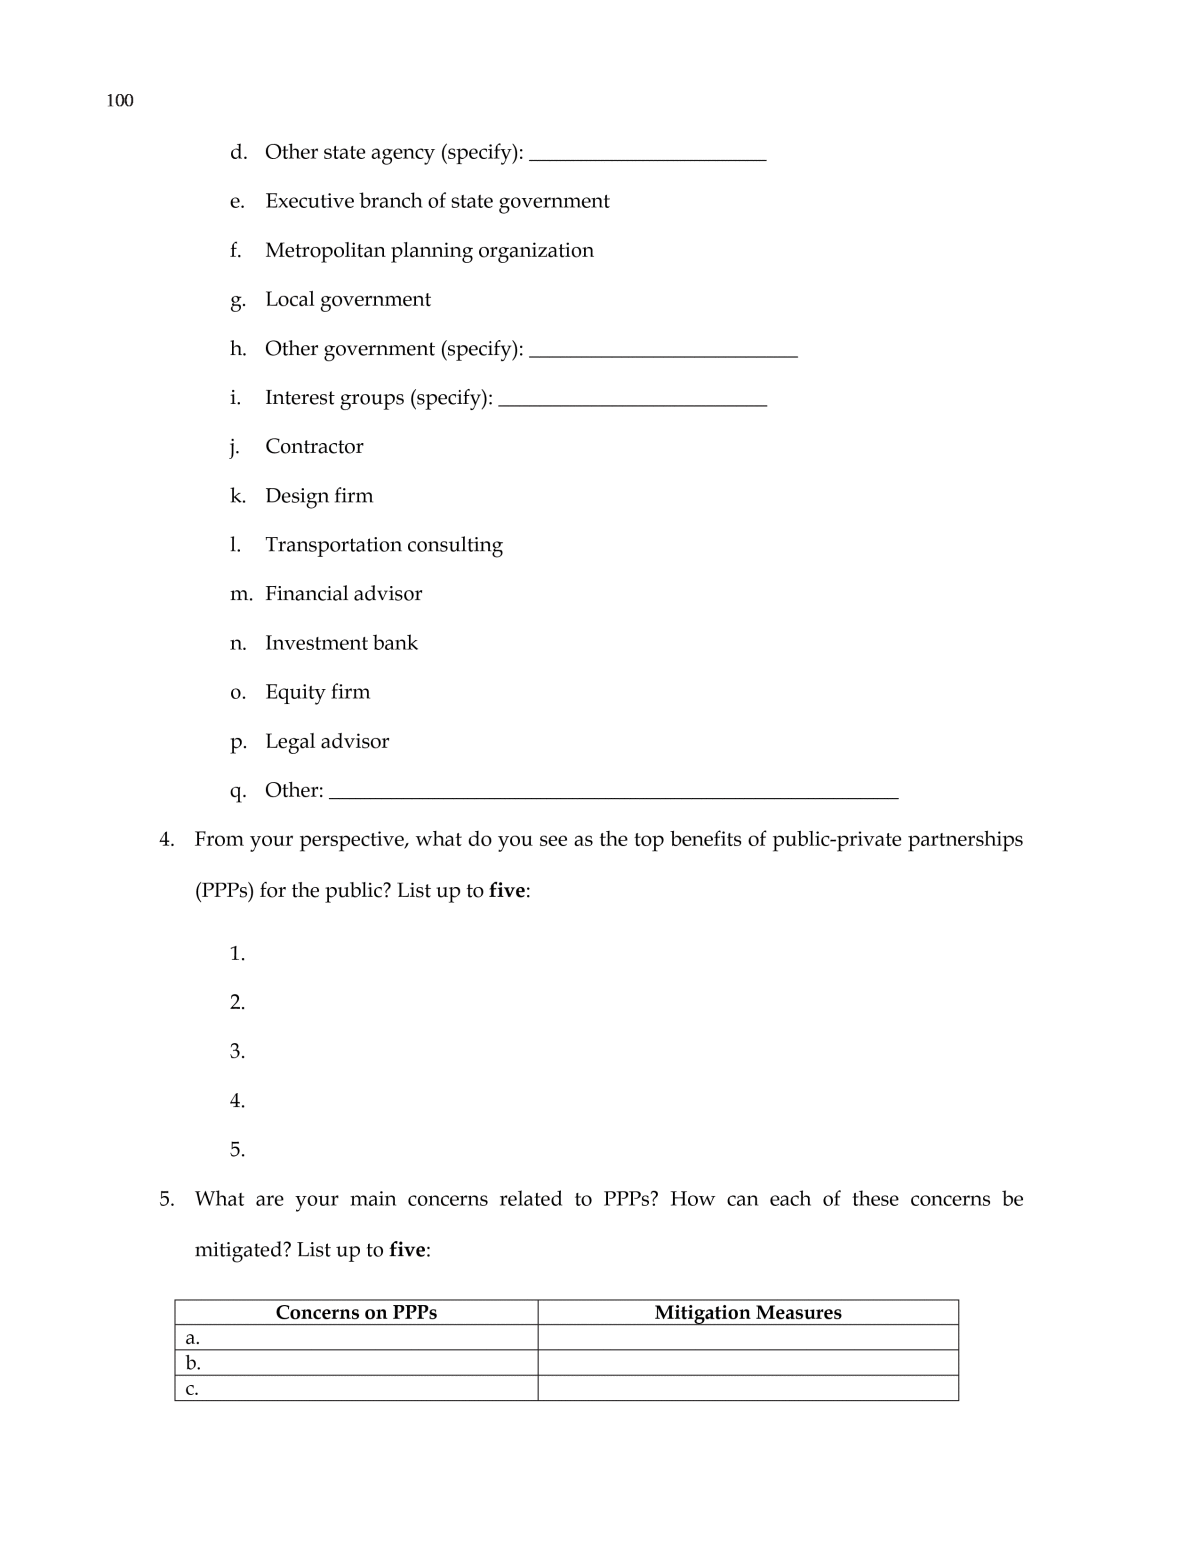 Group Questionnaires